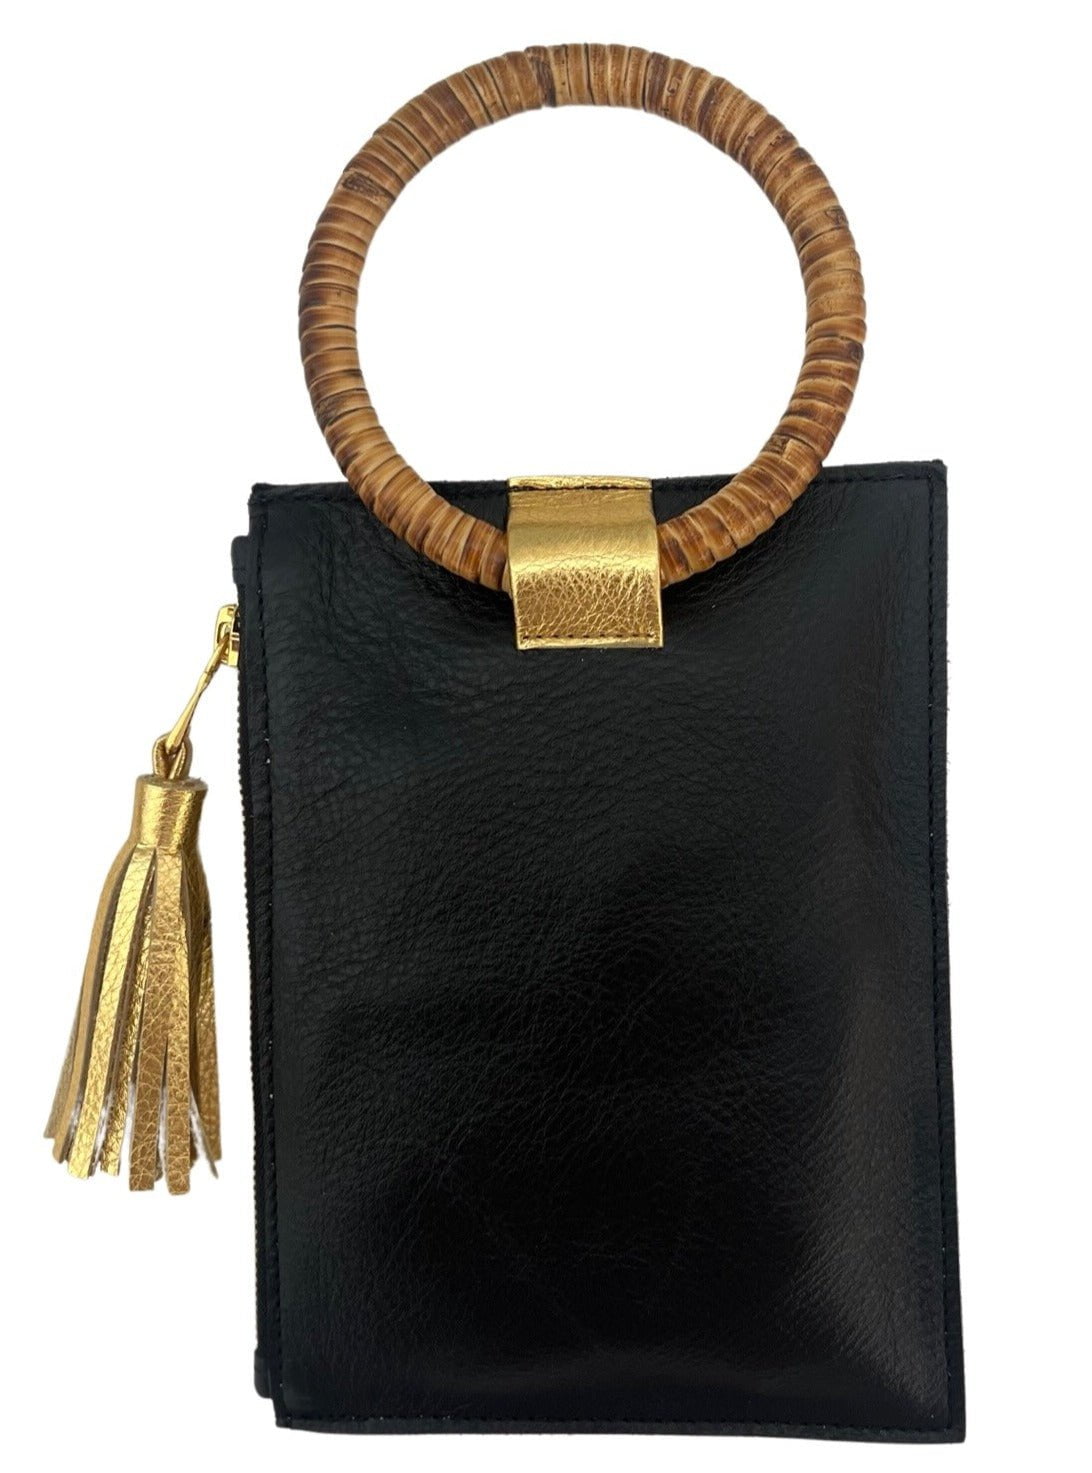 Black Foldover Clutch Purse w/ Tassel, Elegant Evening Handbag